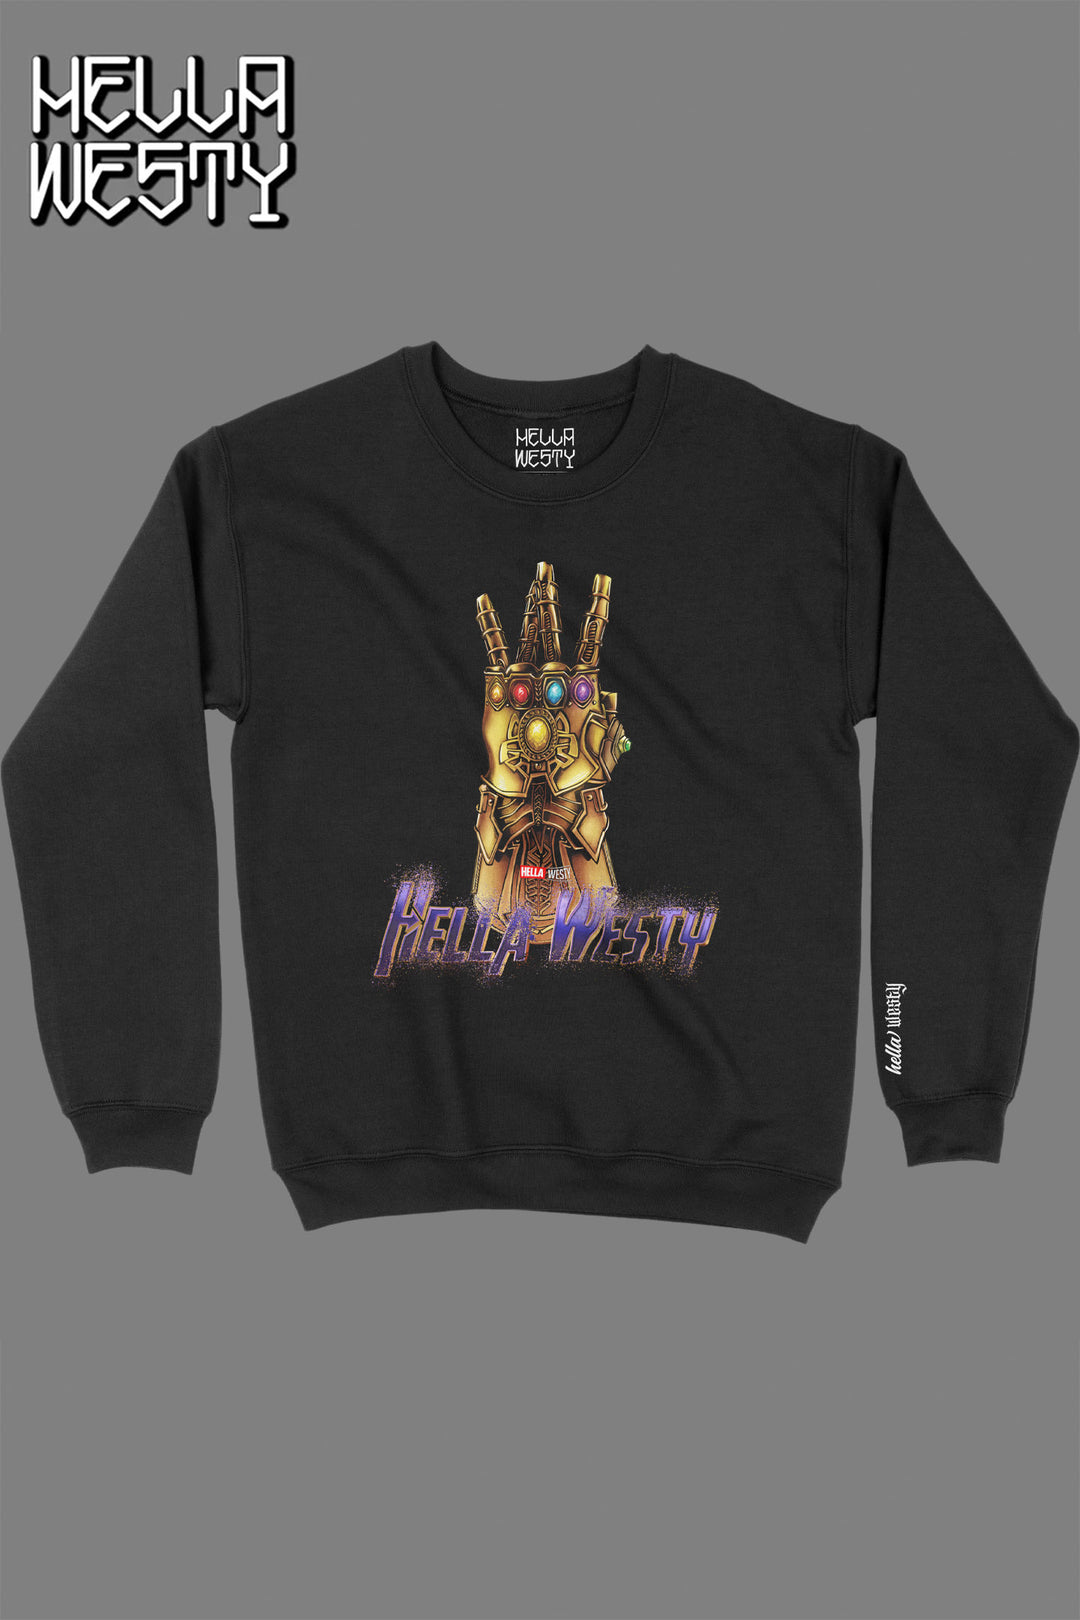 Infinity West Sweater